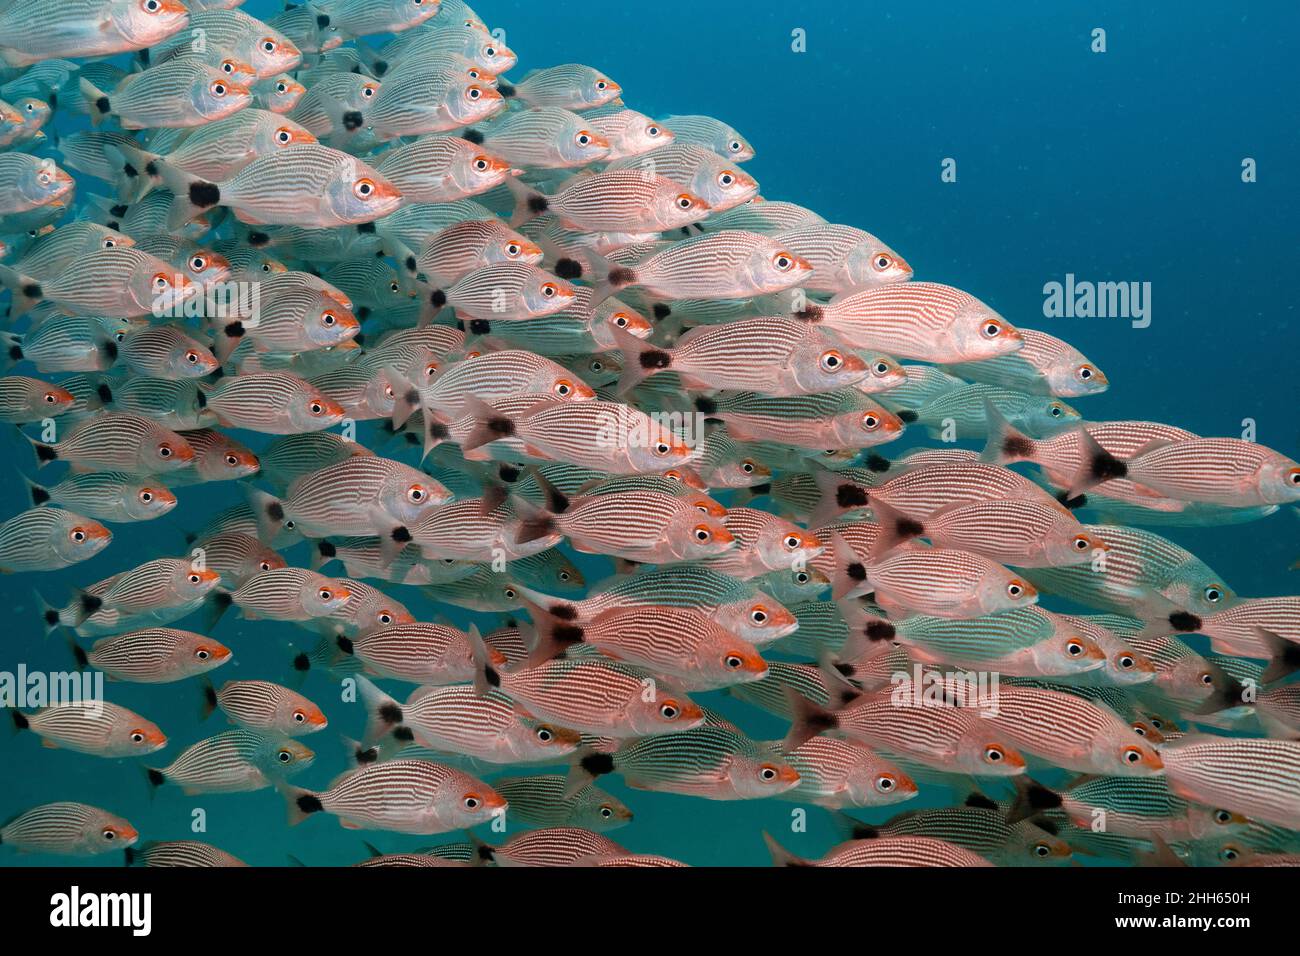 School of orange and white striped fish swimming undersea Stock Photo